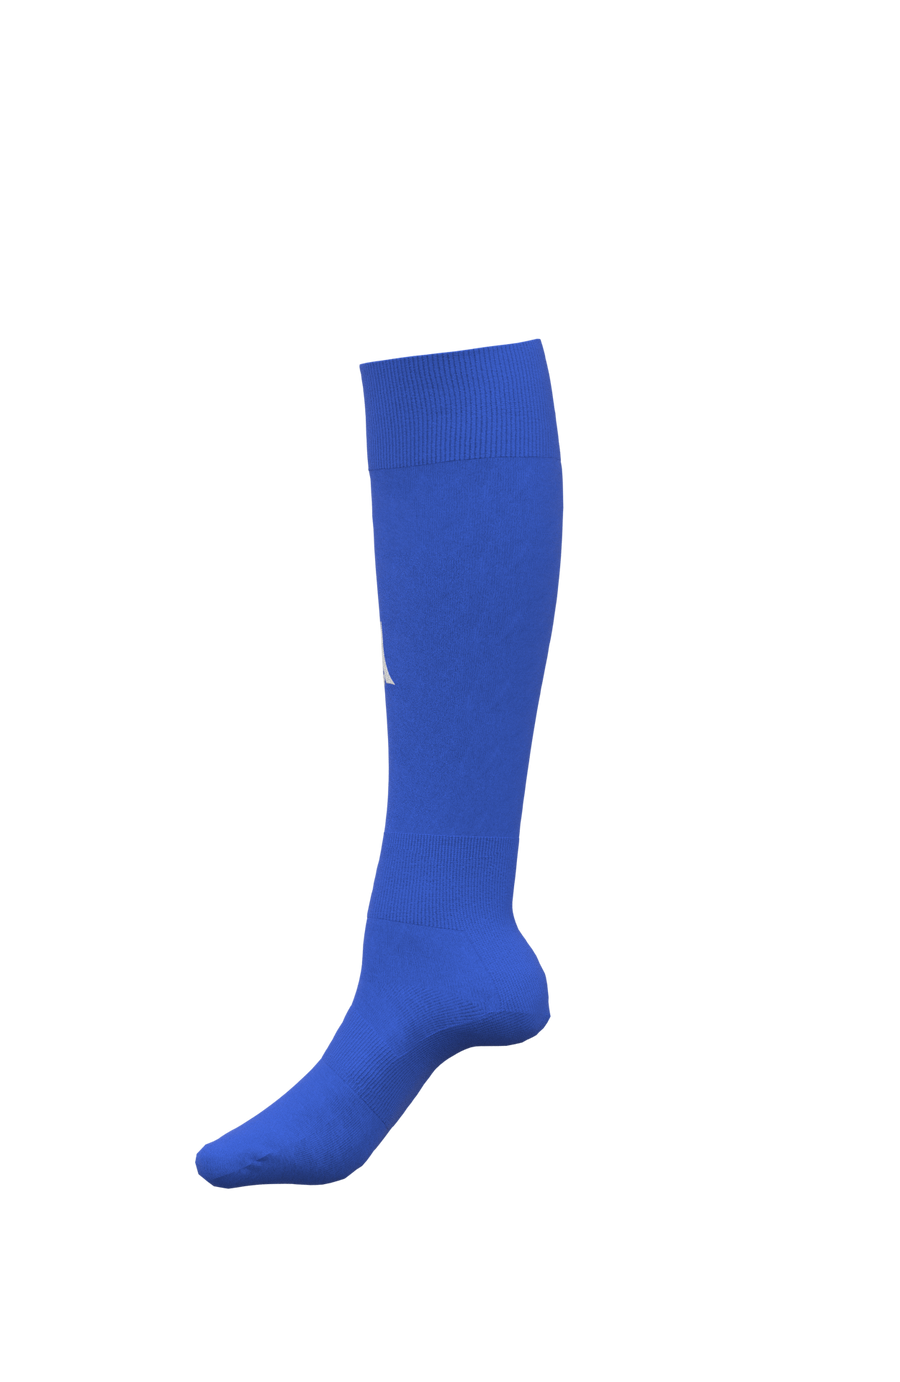 $10.00 - Caño Soccer Royal Blue Sock